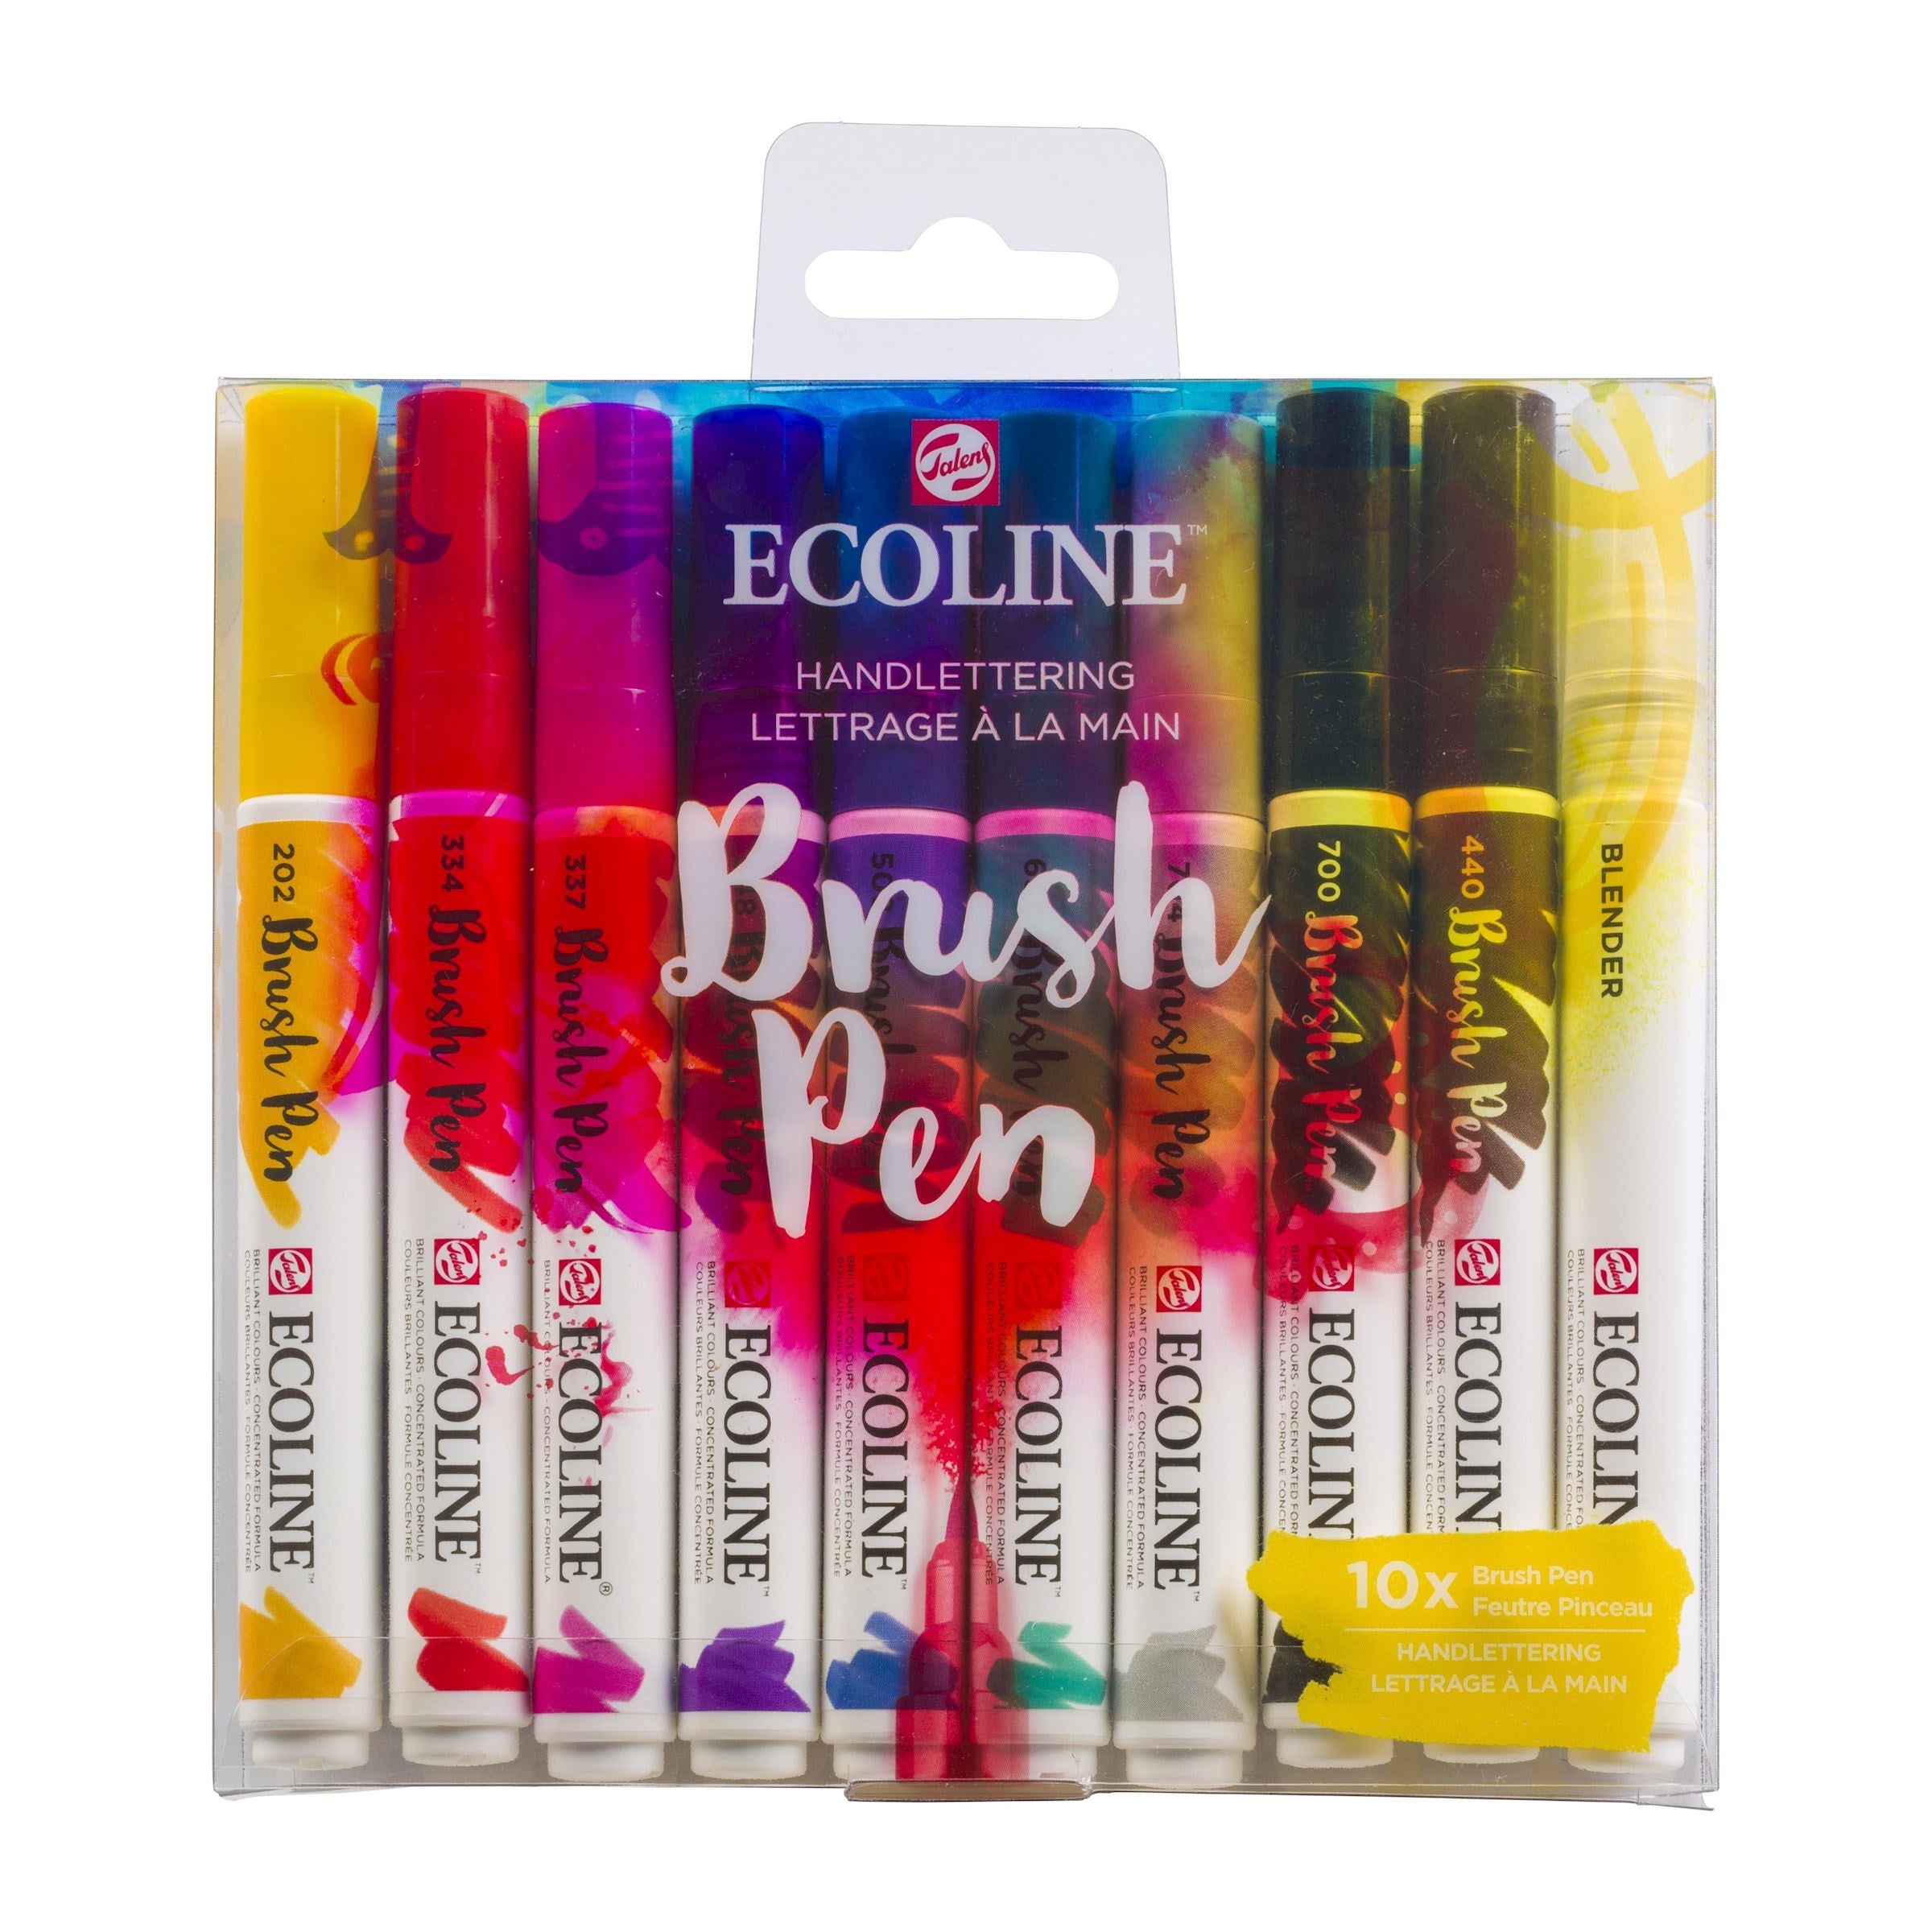 Ecocline Brush Pens : Handlettering set of 10